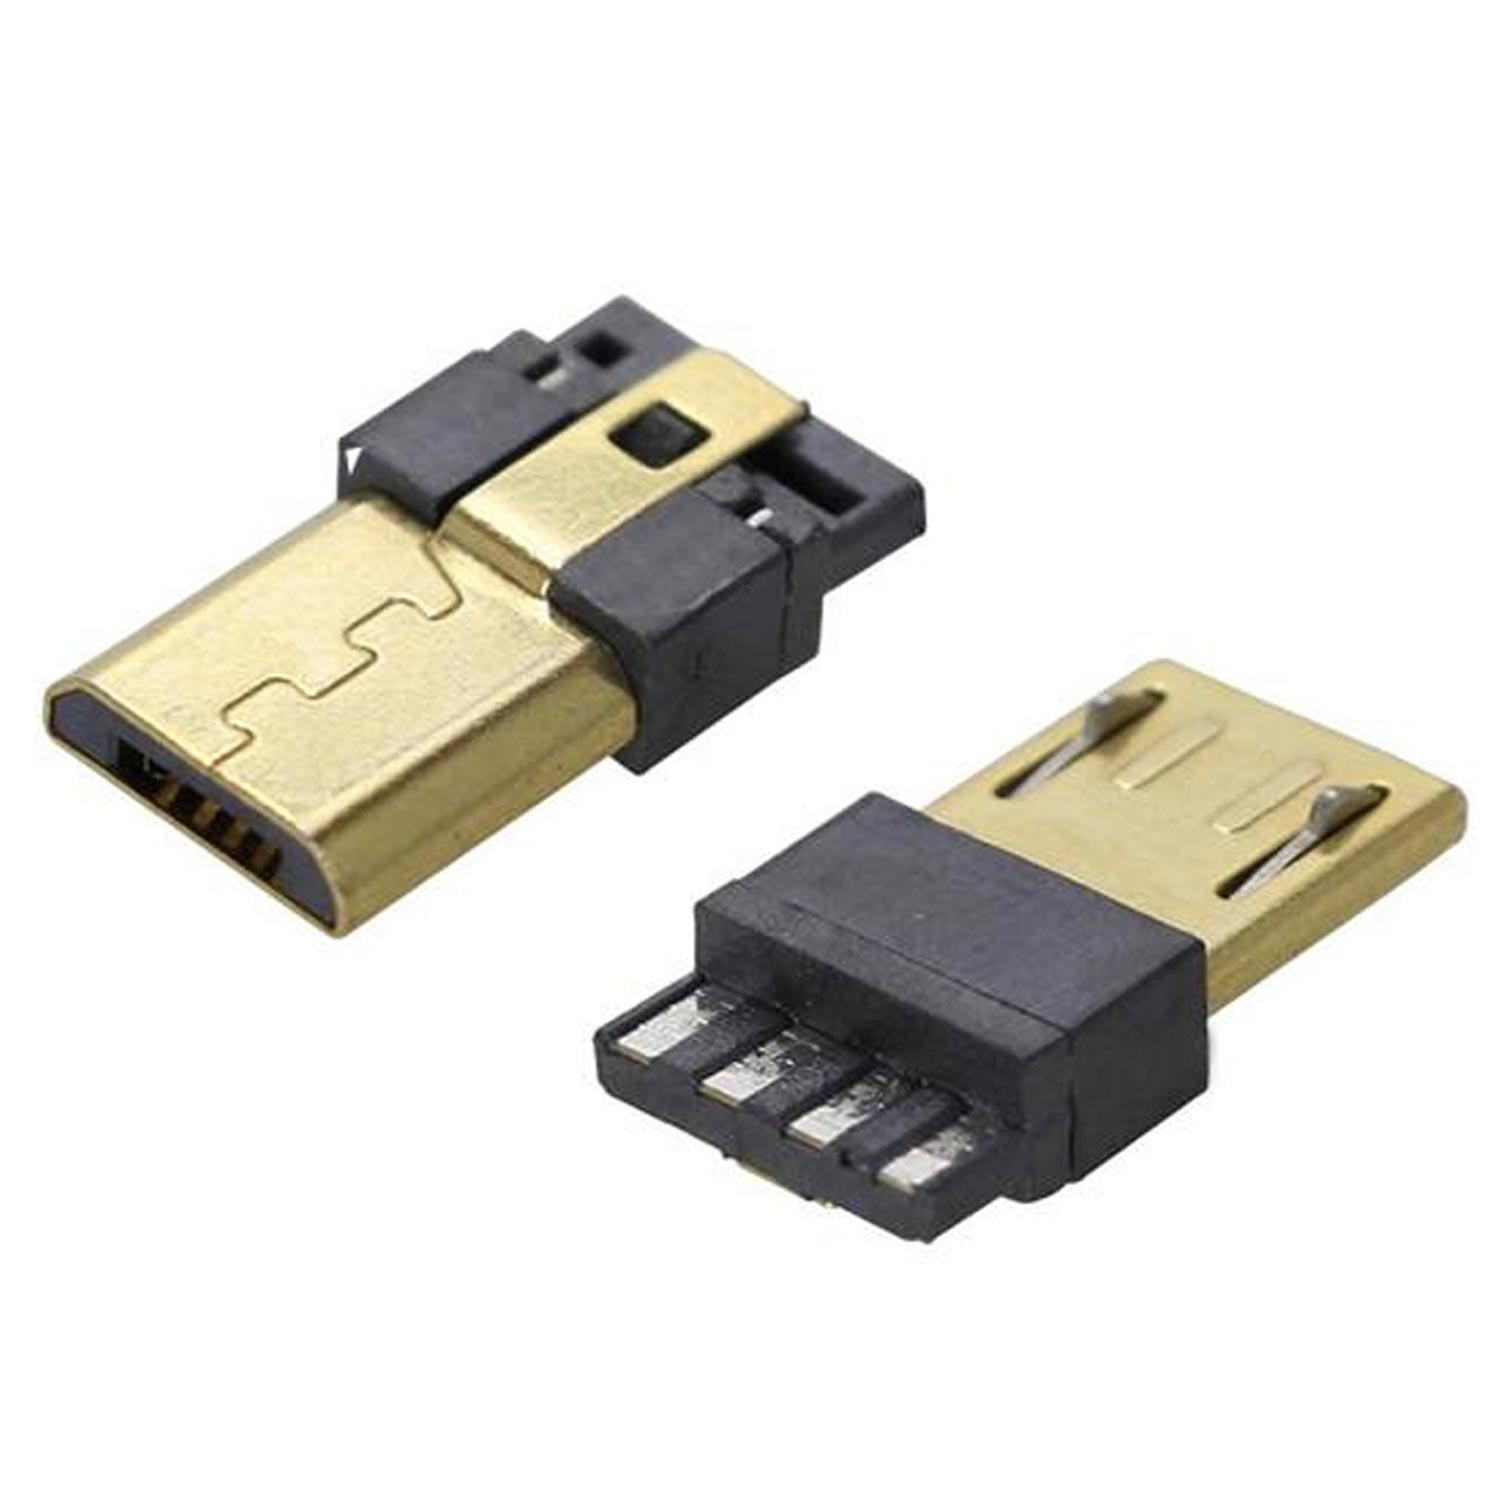 ŞASE MICRO USB FİŞ 4PİN ERKEK KARKAS GOLD